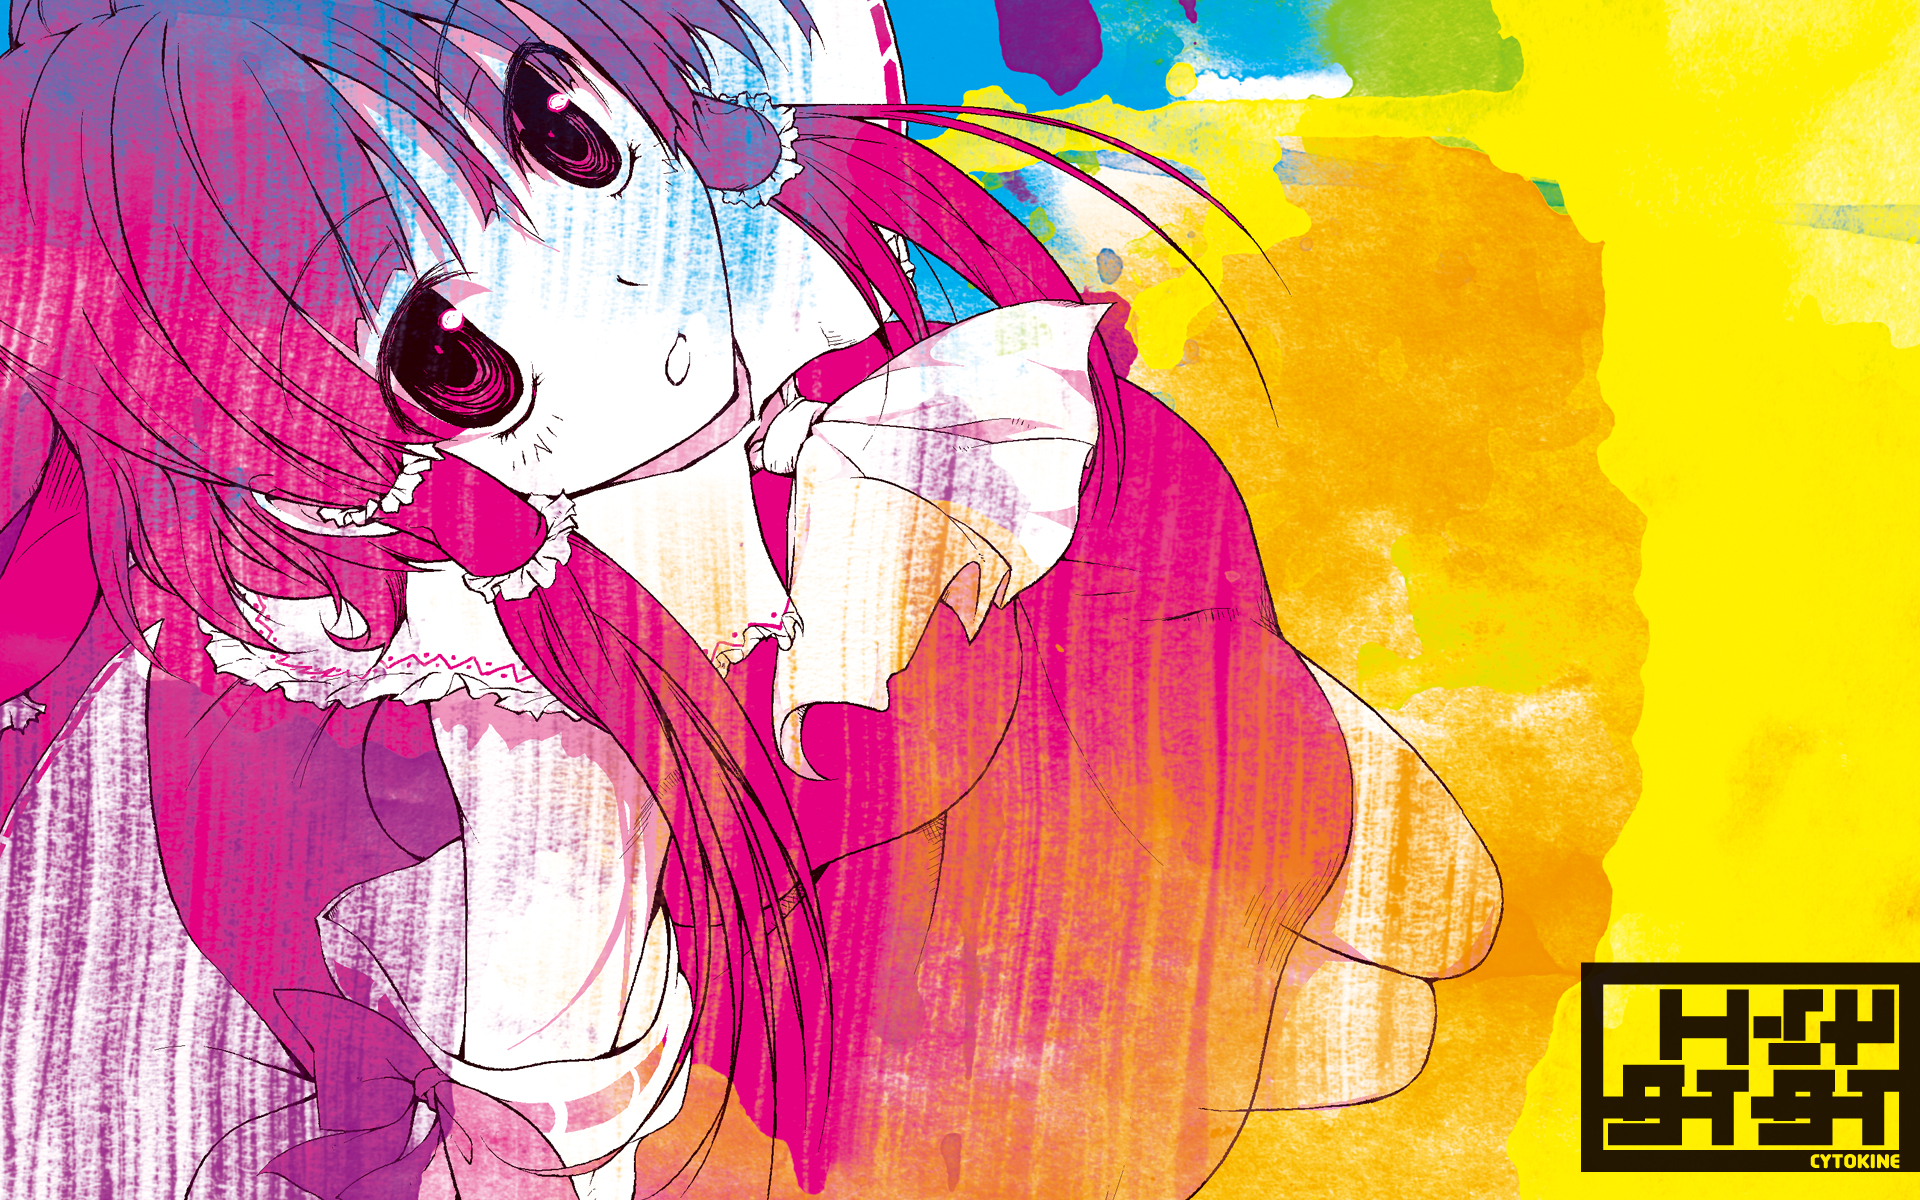 Reimu Hakurei surrounded by vivid colors.